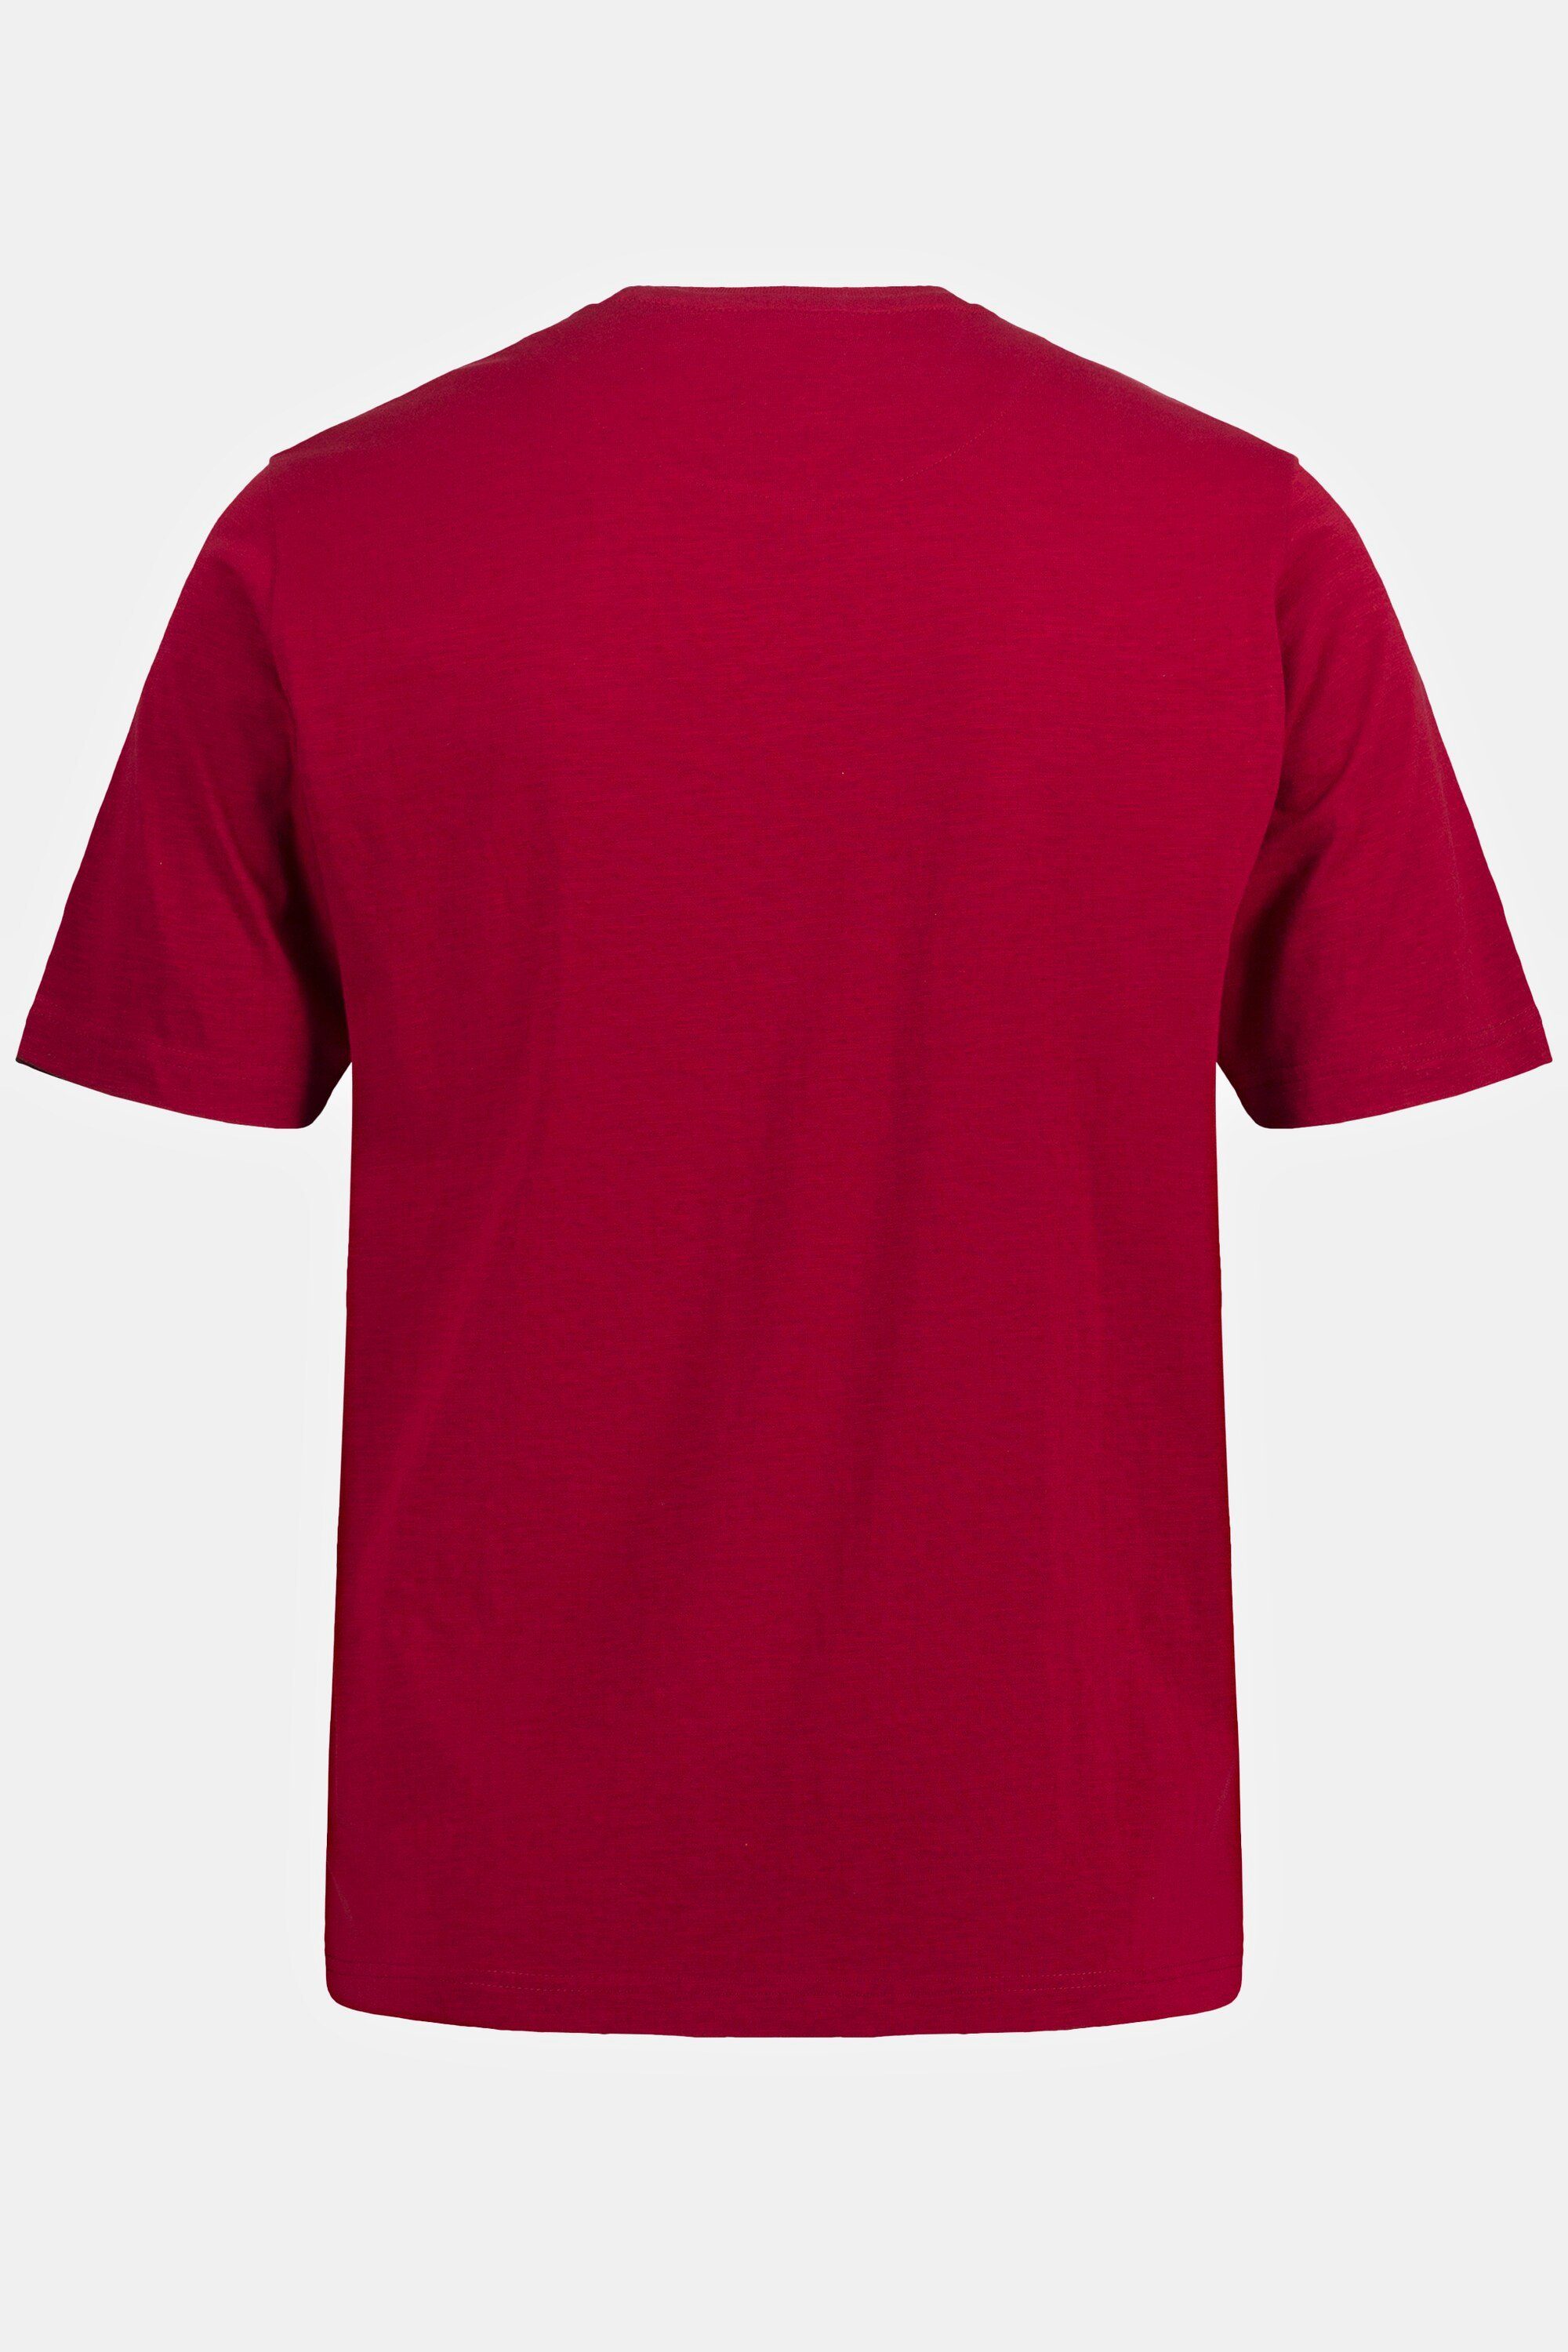 Halbarm Palmen Print T-Shirt Flammjersey JP1880 rot T-Shirt